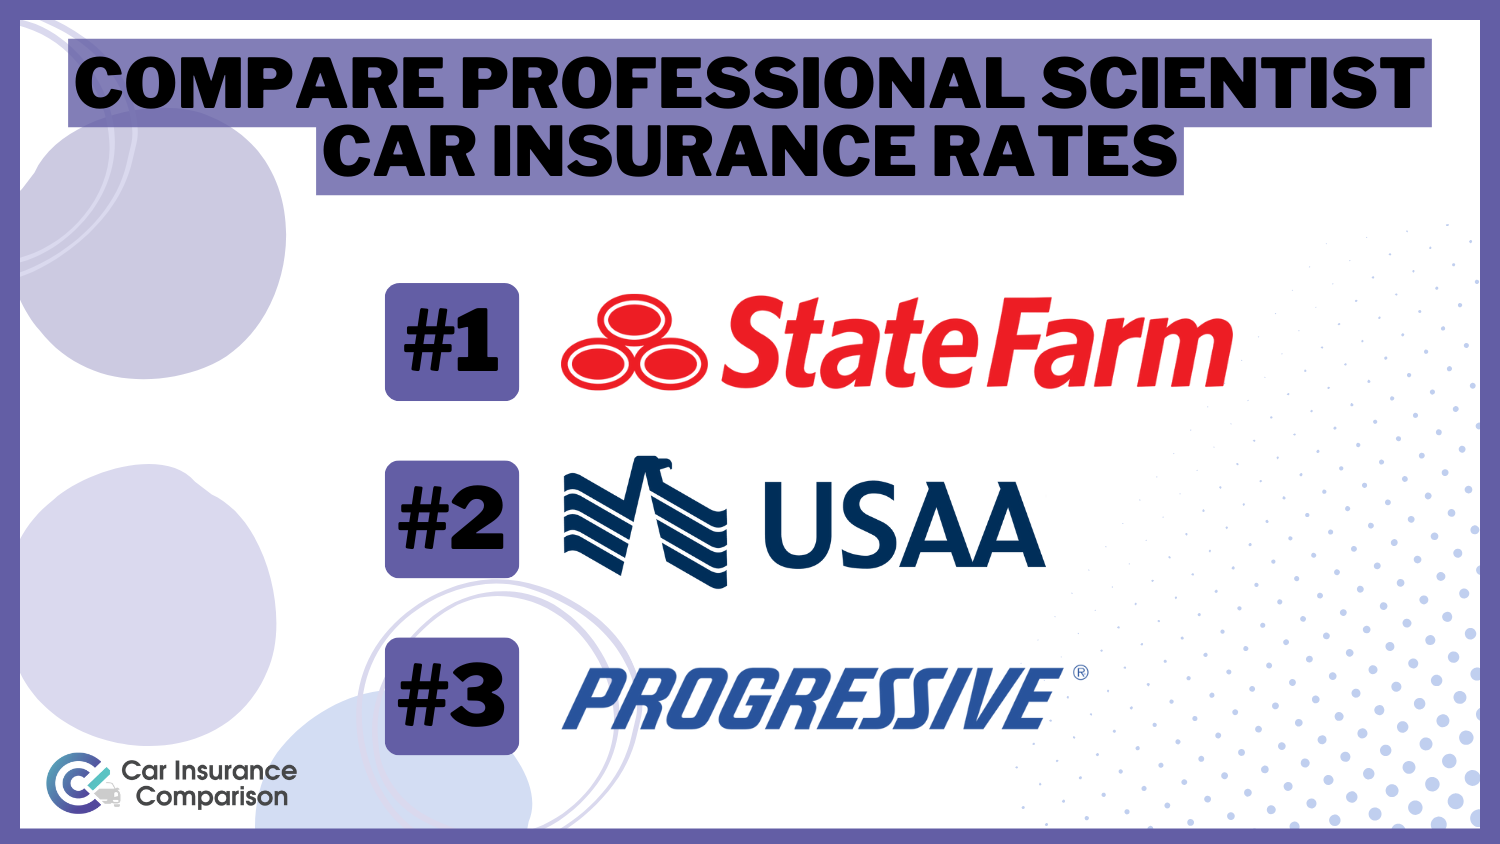 Best Professional Scientist Car Insurance Rates: State Farm, USAA, and Progressive.